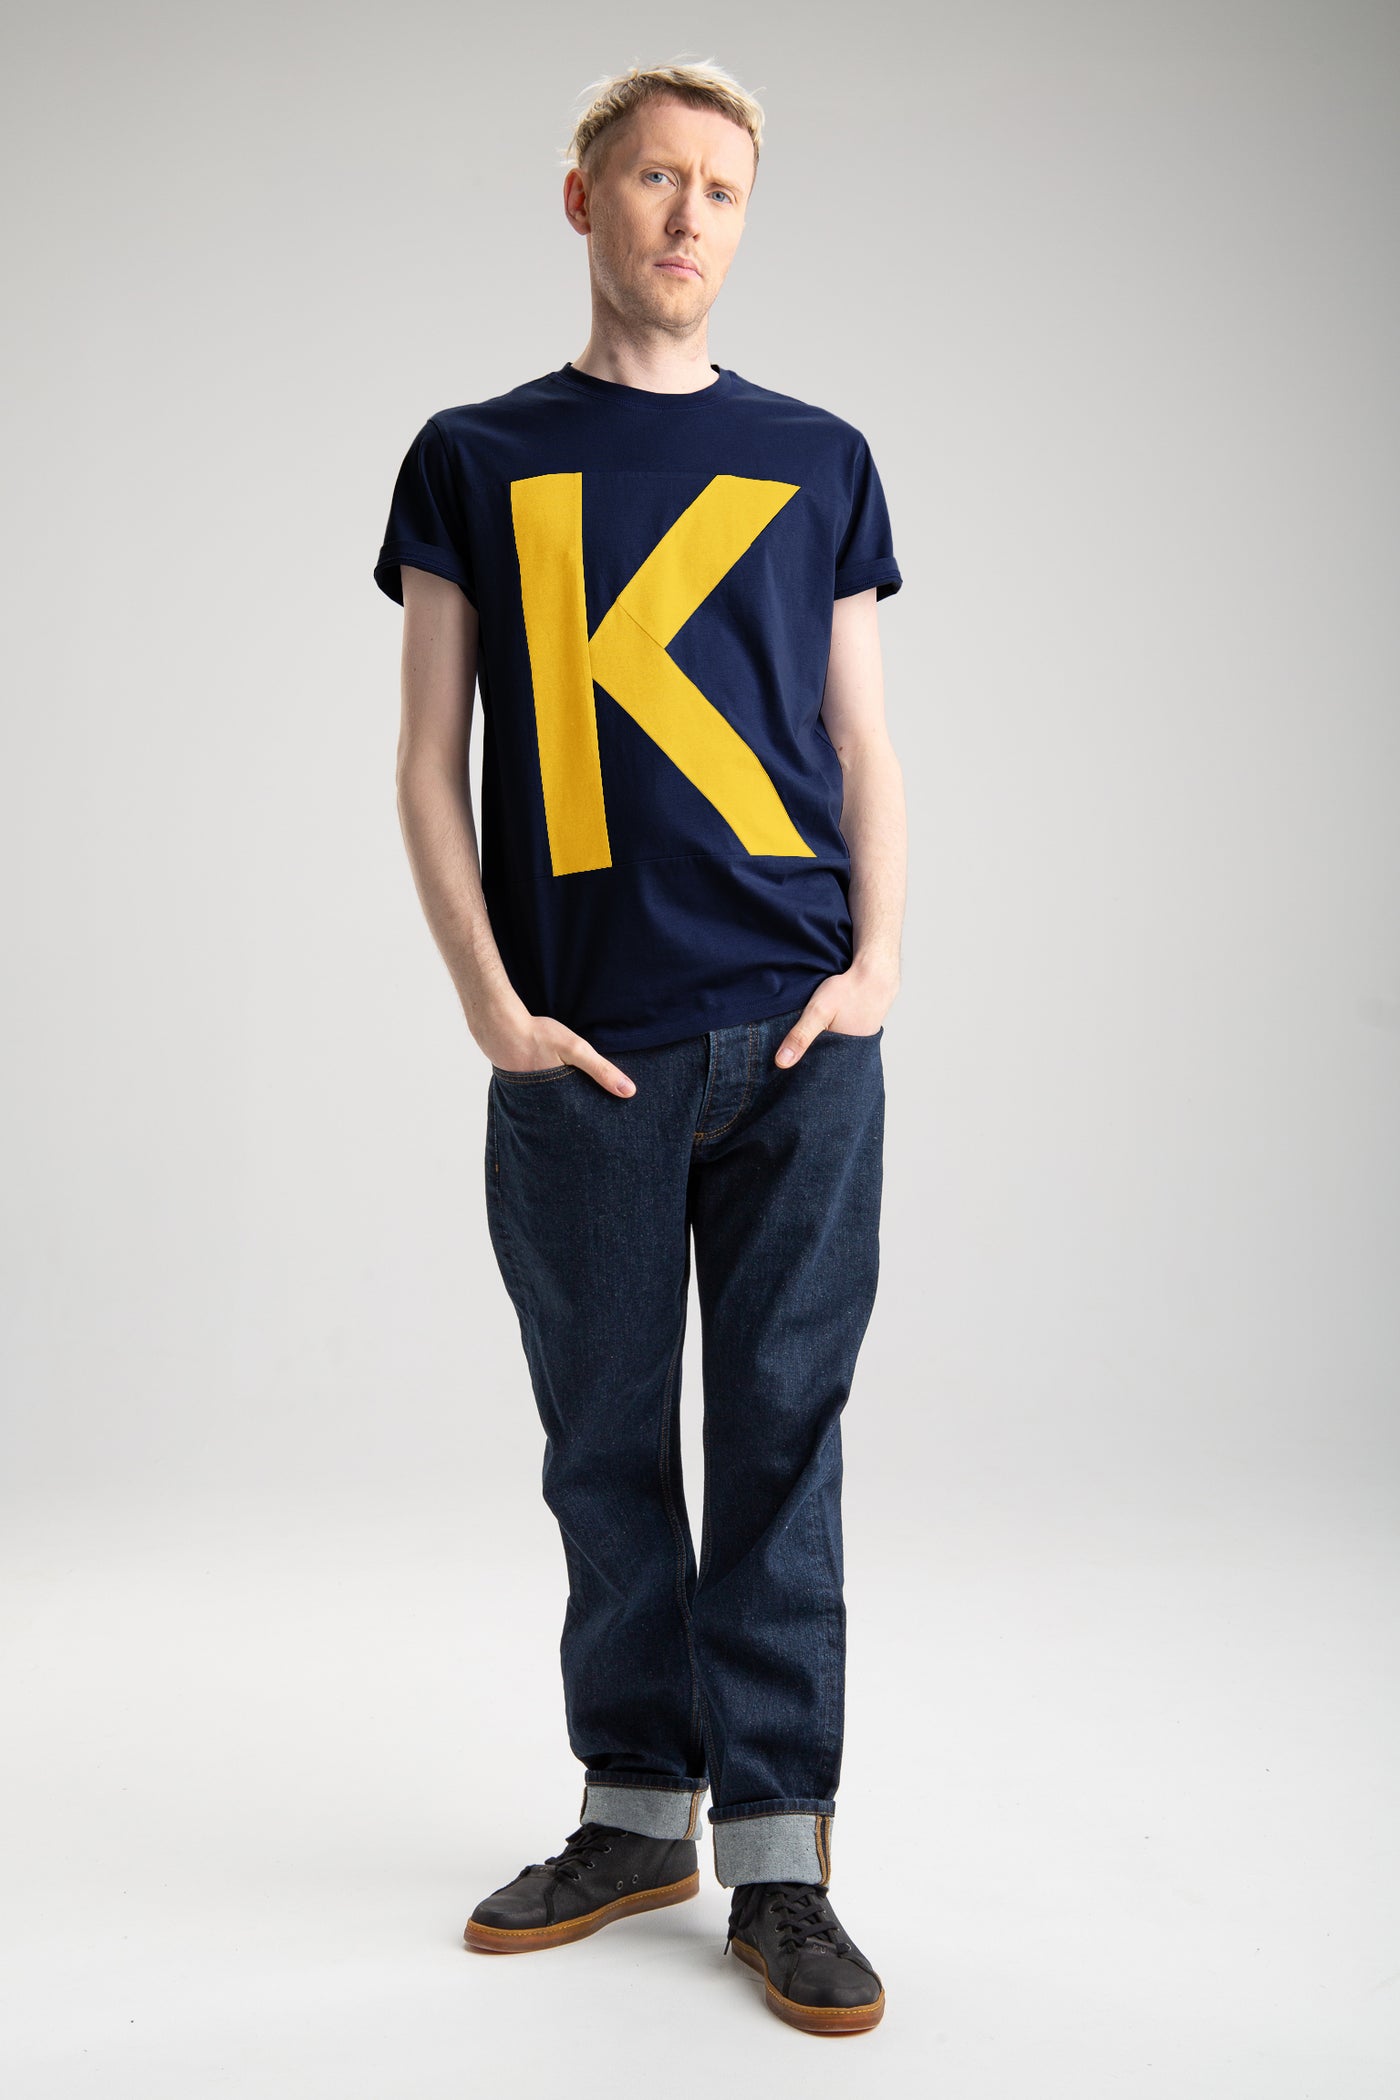 Up-shirt for men - K motif | Blue, yellow